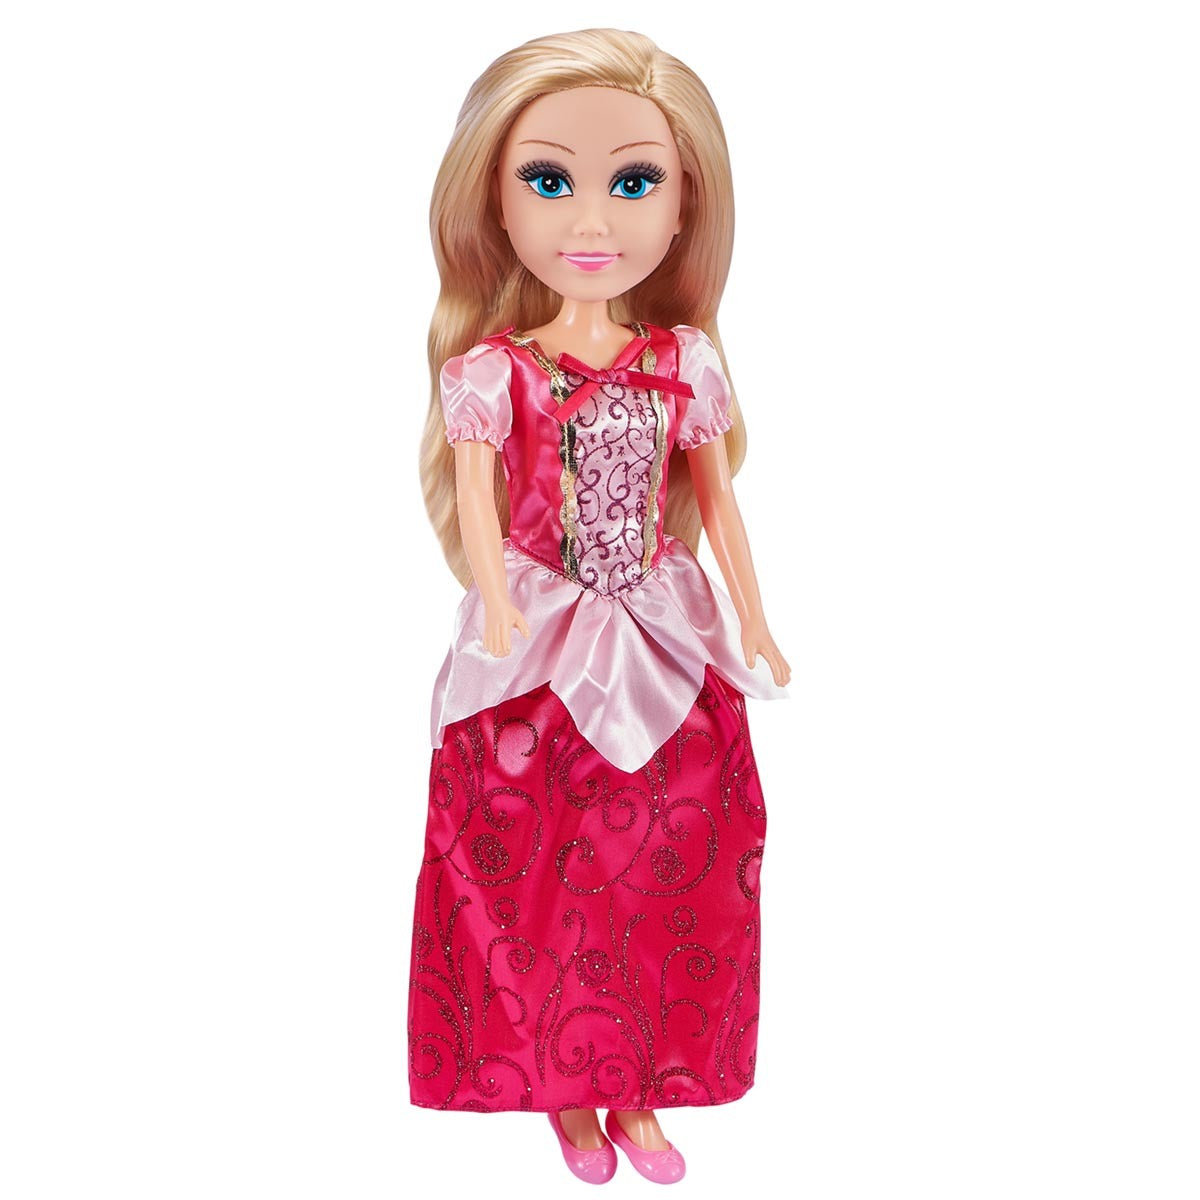 Glitzeez Princess 46cm Doll (Styles Vary)